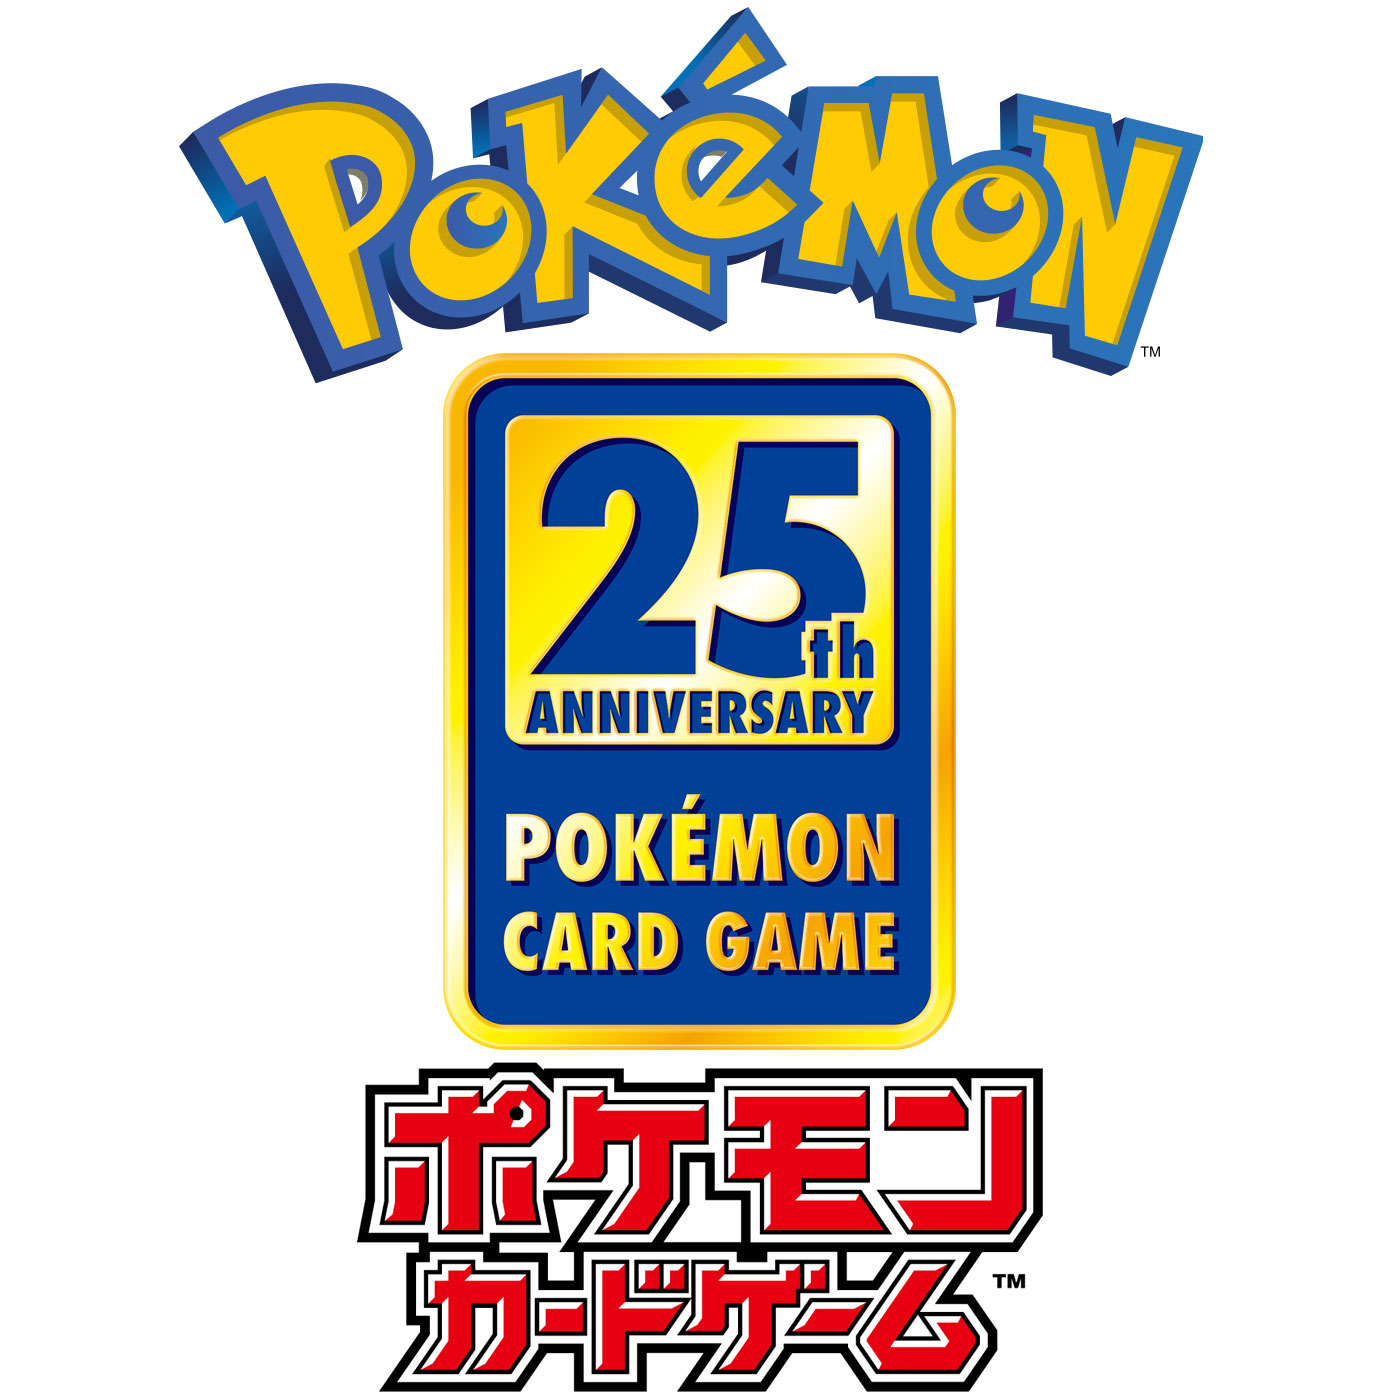 GOLDEN BOX Pokémon CARD GAME Sword & Shield 25th ANNIVERSARY